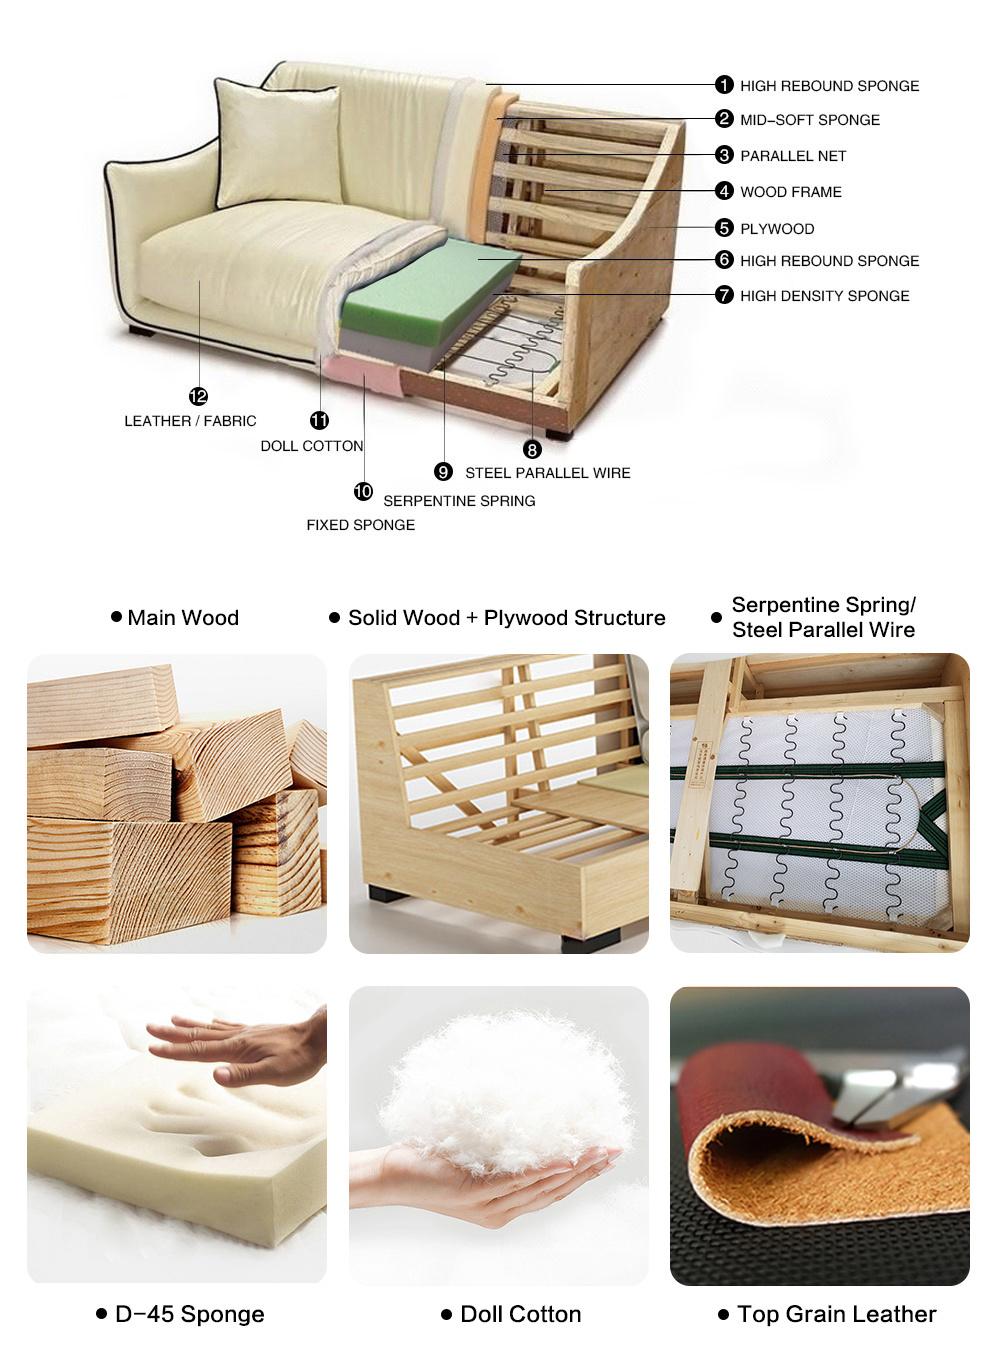 Online Wholesale Italian Deisgn Home Furniture Lounge Sectional Velvet Fabric Sofa Set